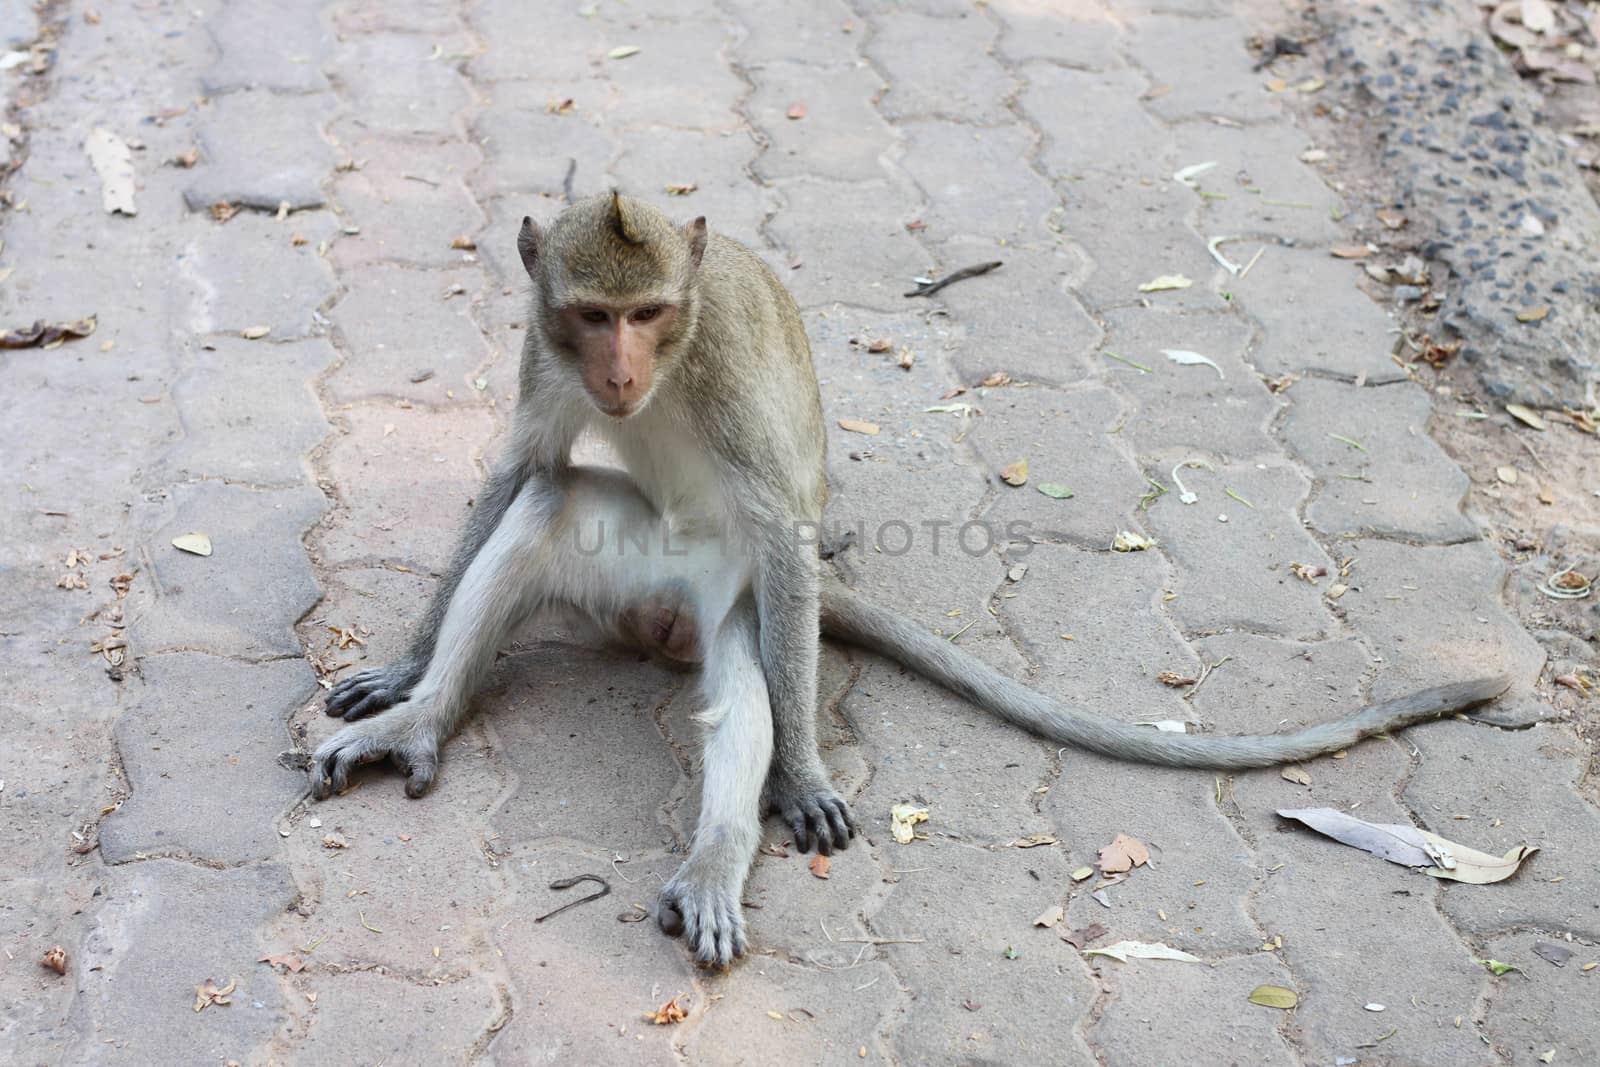 Monkey sitting on the cement floor by primzrider